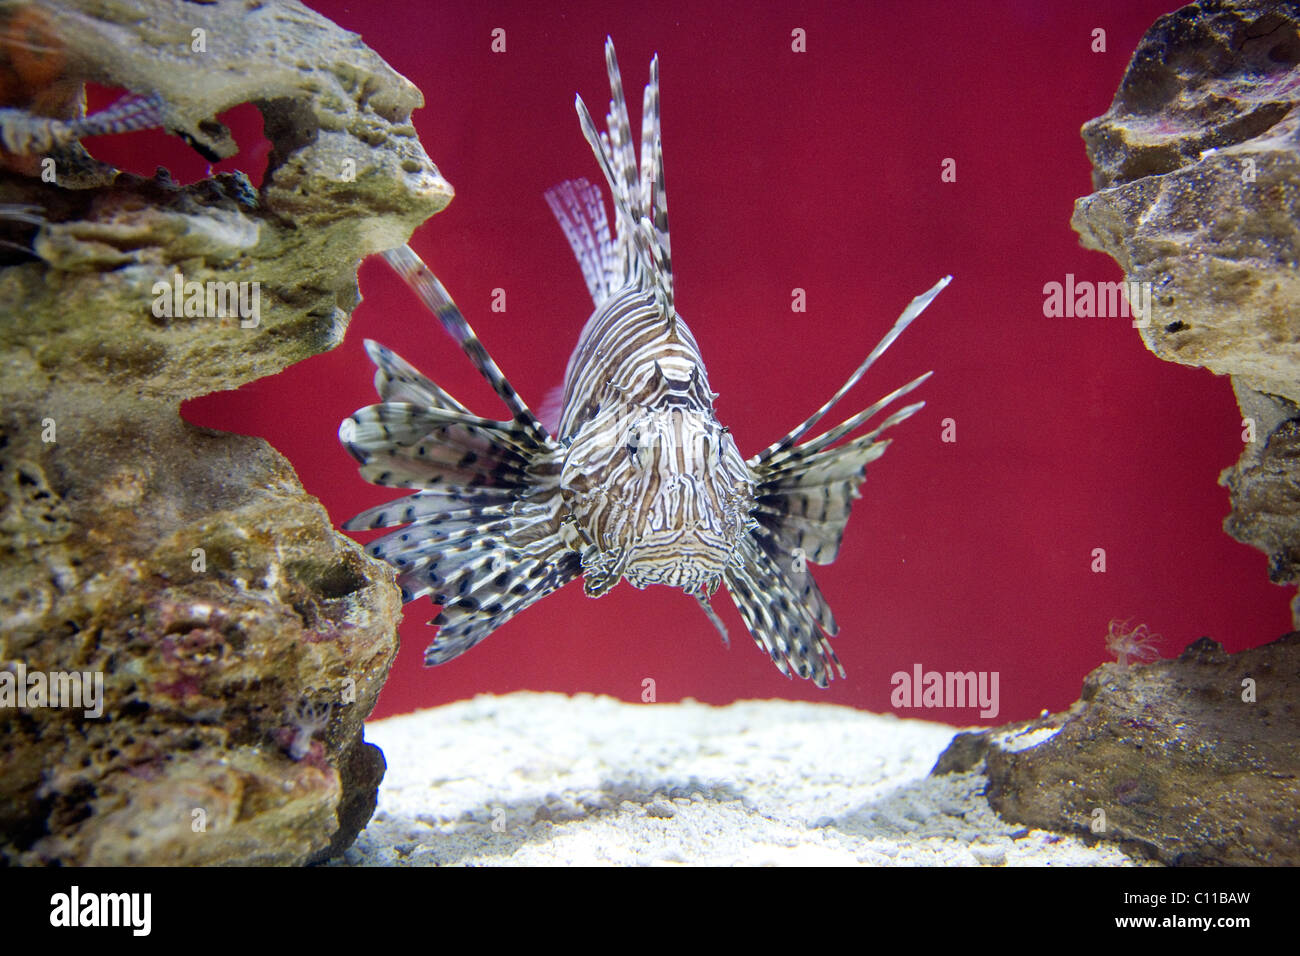 Teufel Firefish in Kapstadt Aquarium Stockfoto